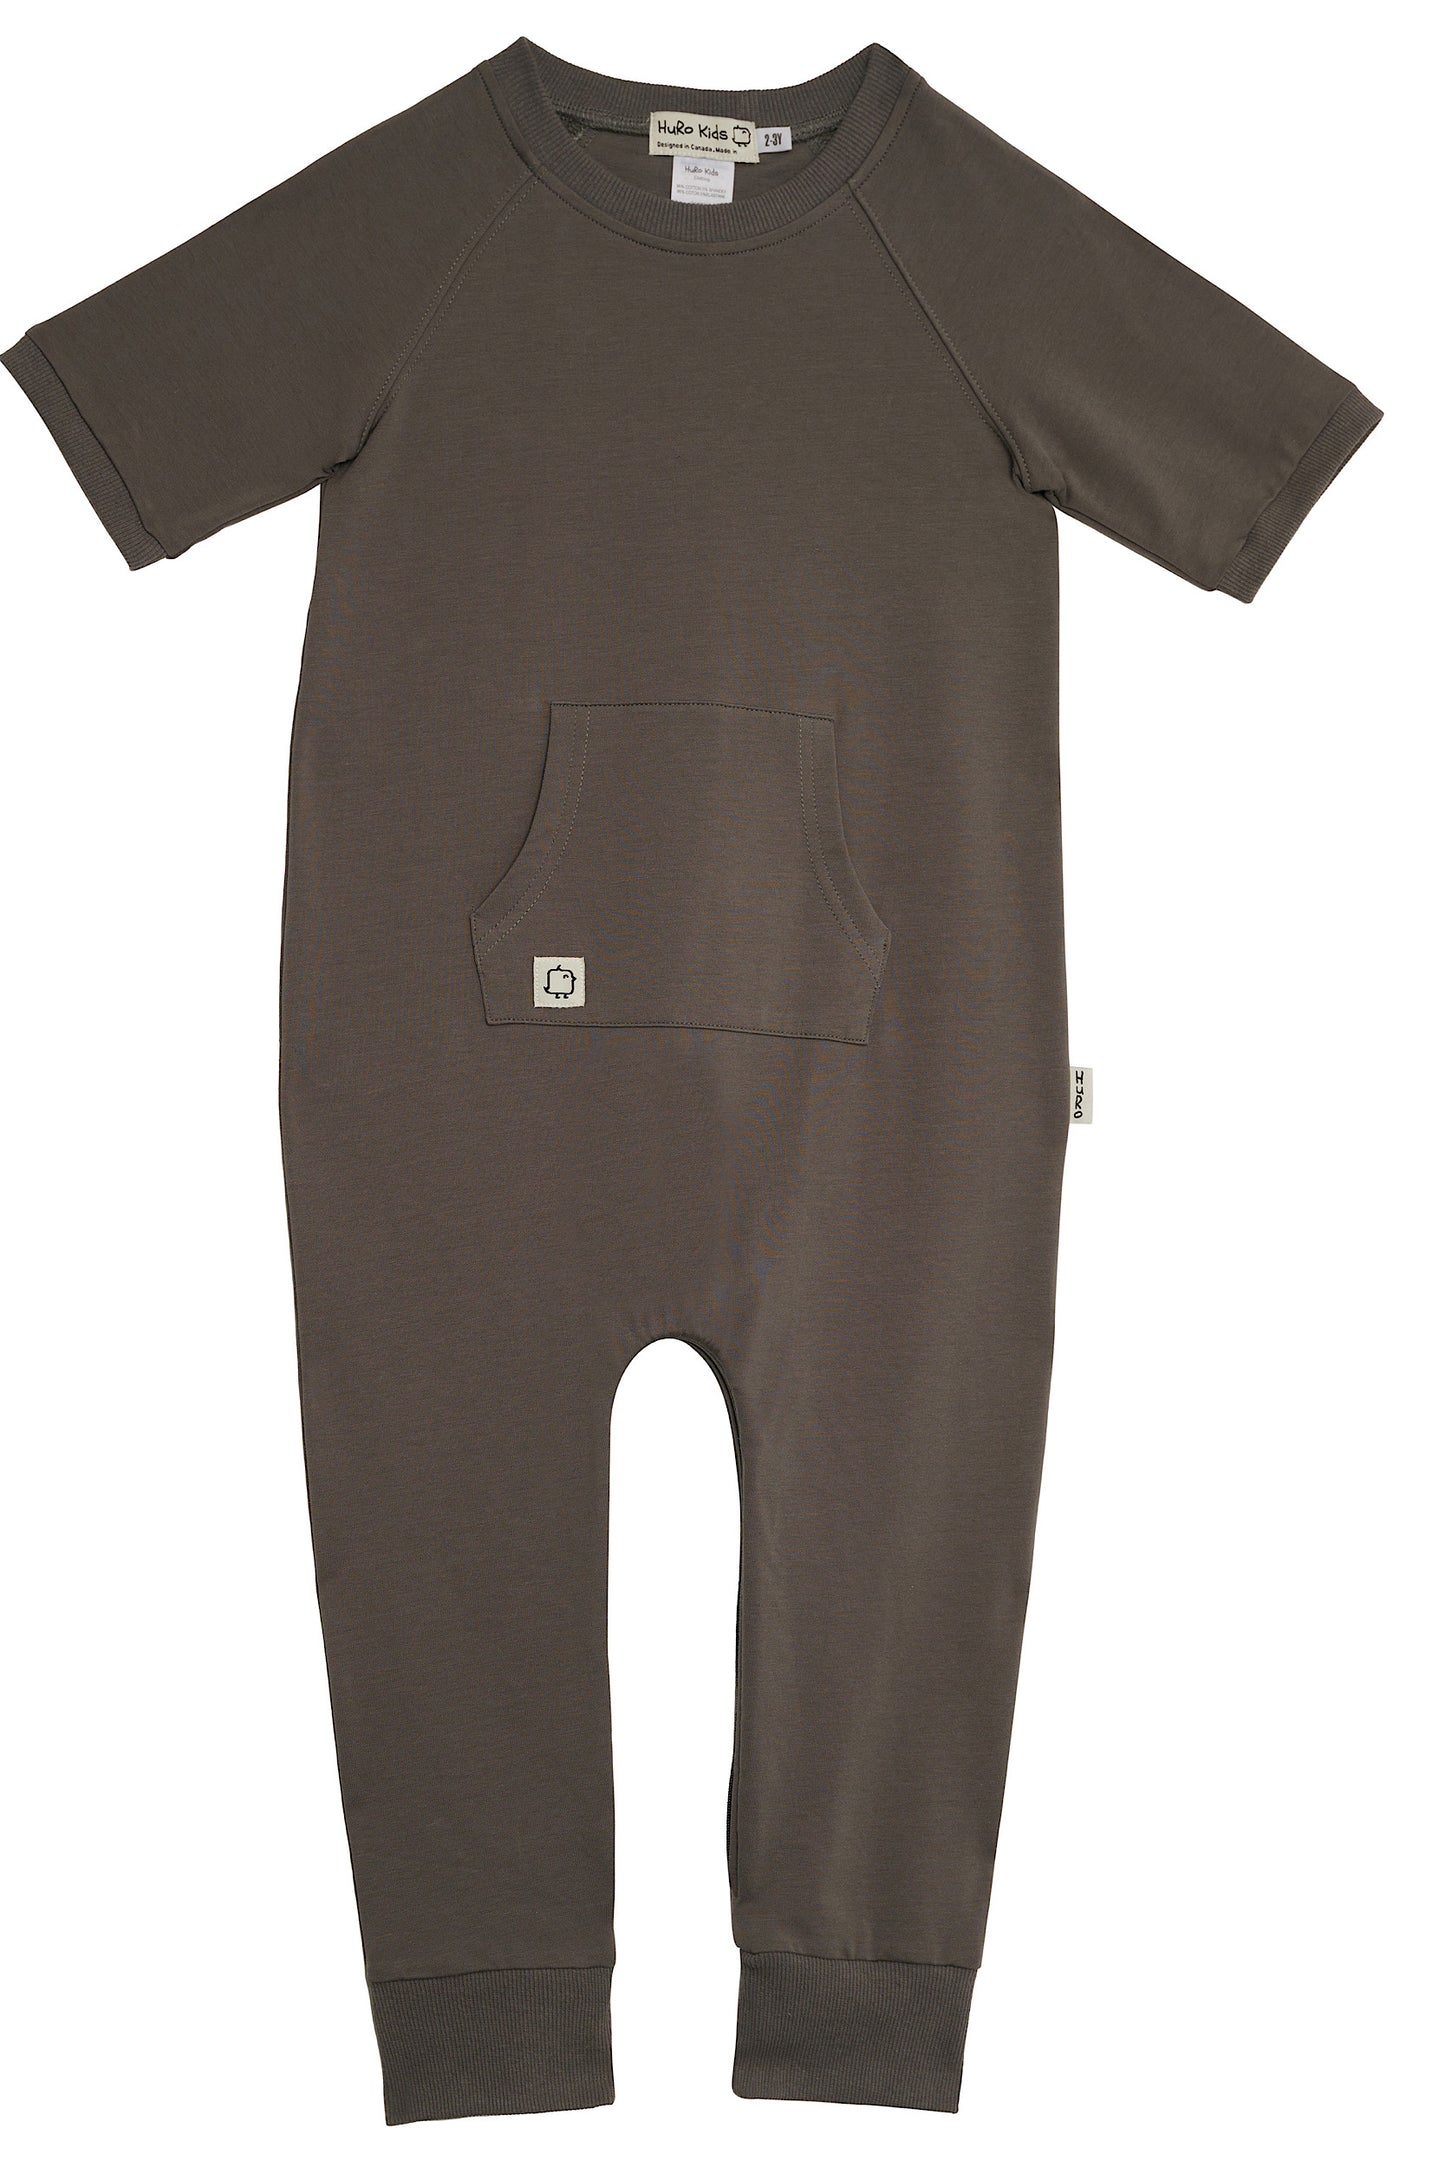 Short Sleeve Romper - Charcoal - HuRo Kids Clothing